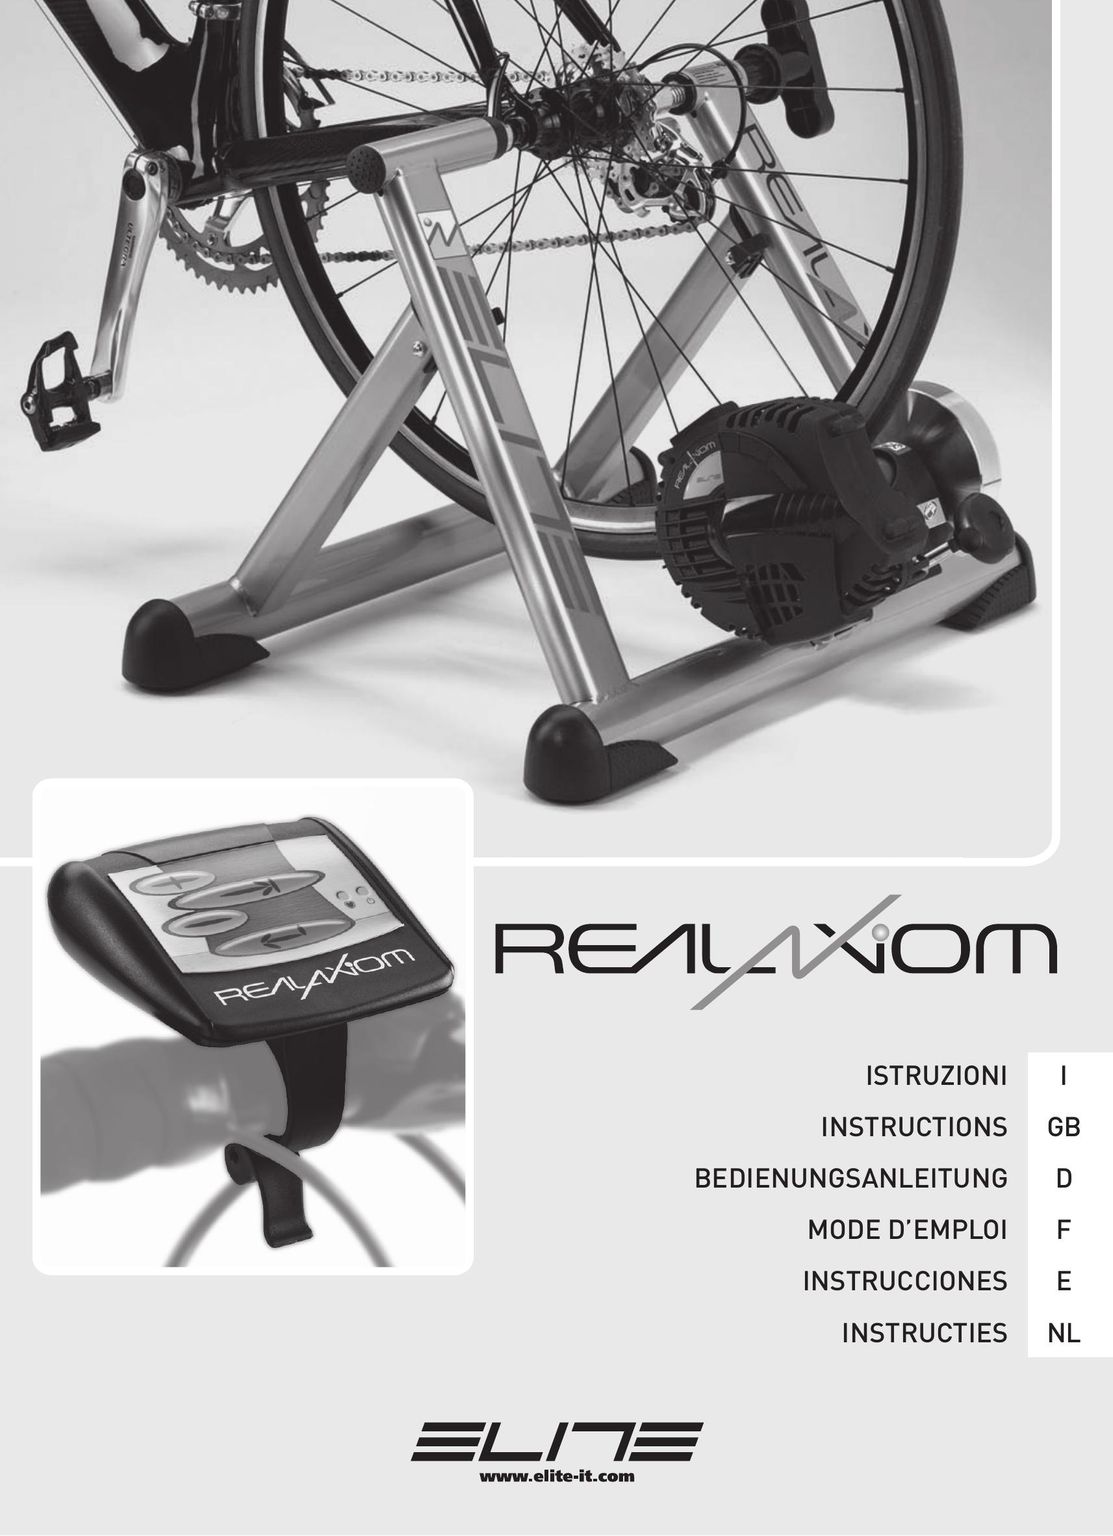 Elite Real AXIOM Exercise Bike User Manual